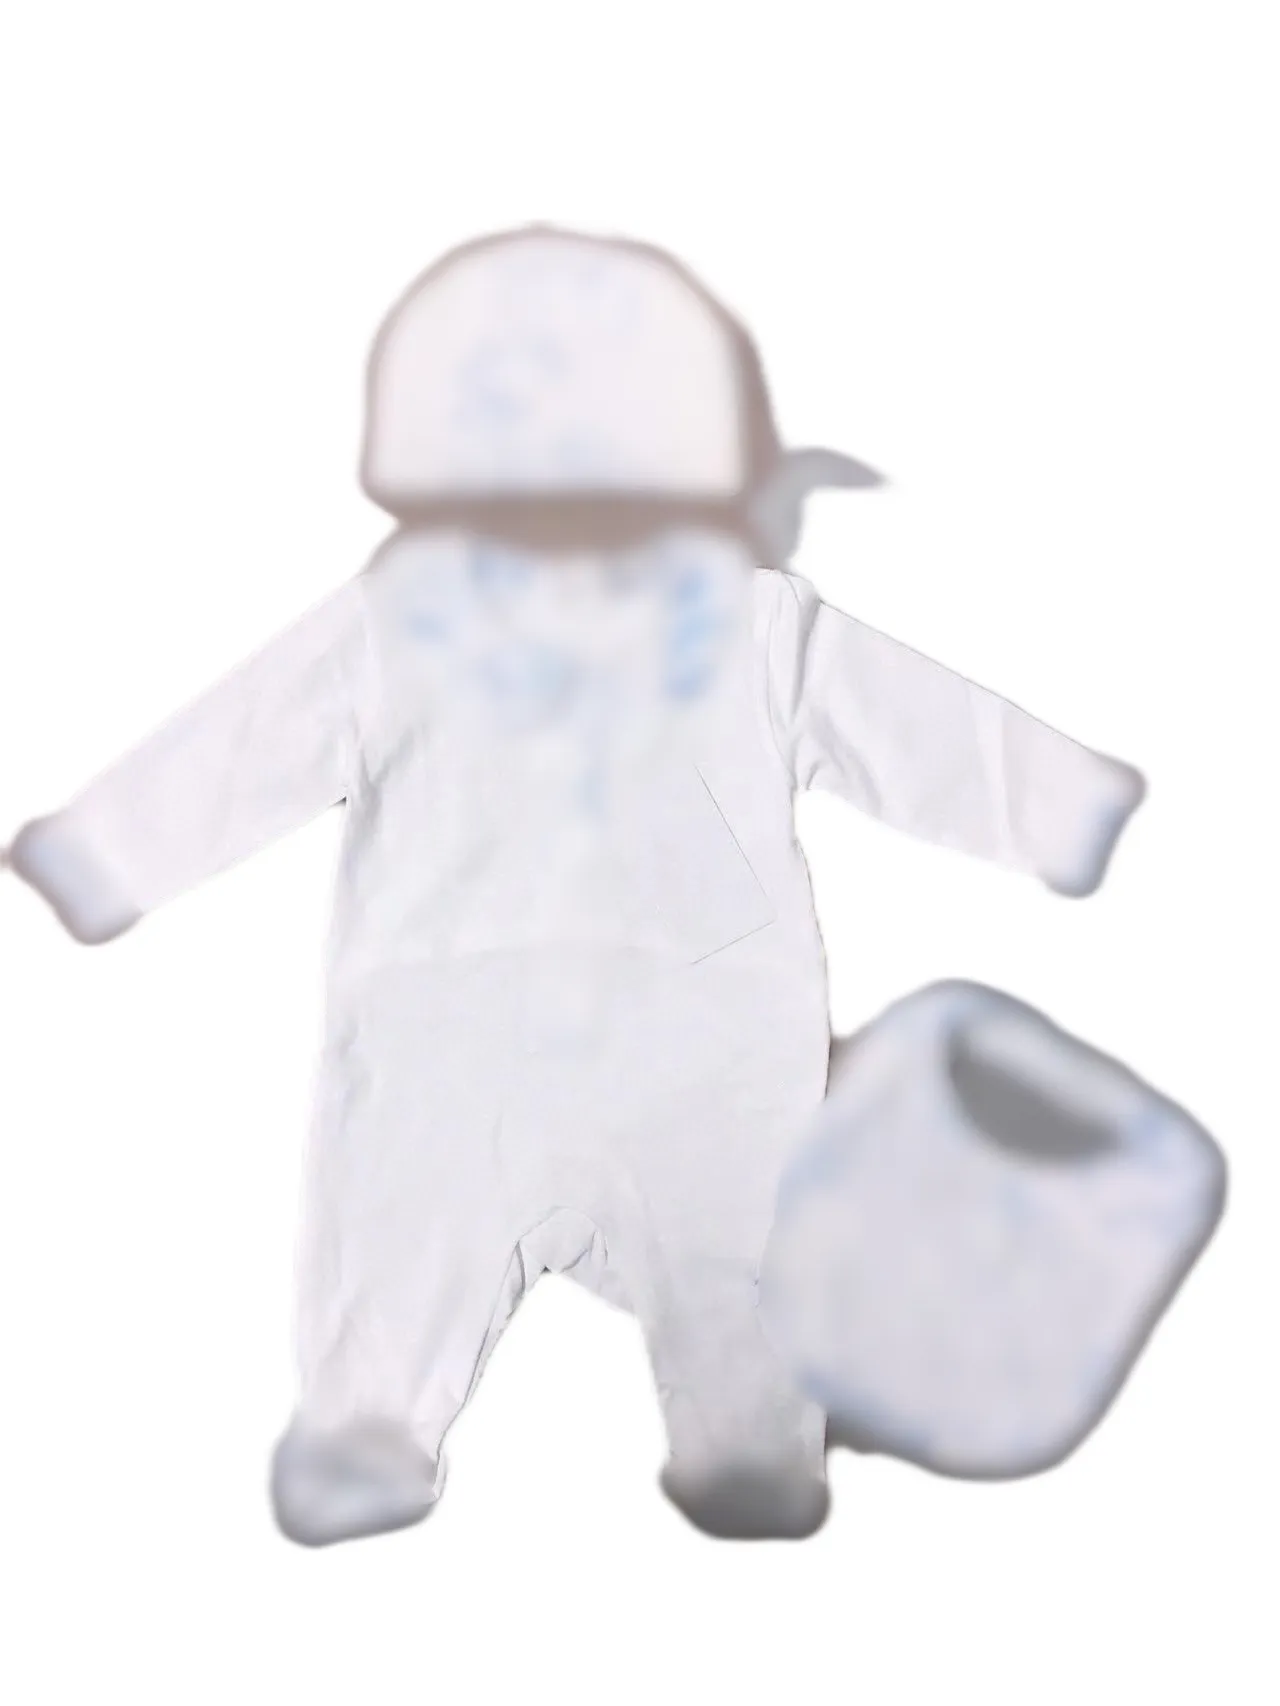 Toddler Baber Baby Clothing Rober Baber Filles Boys Full Sleeve Cotton Soft Suisses Suisse Rompers Hat Bib 3pcs / Set Suit0003